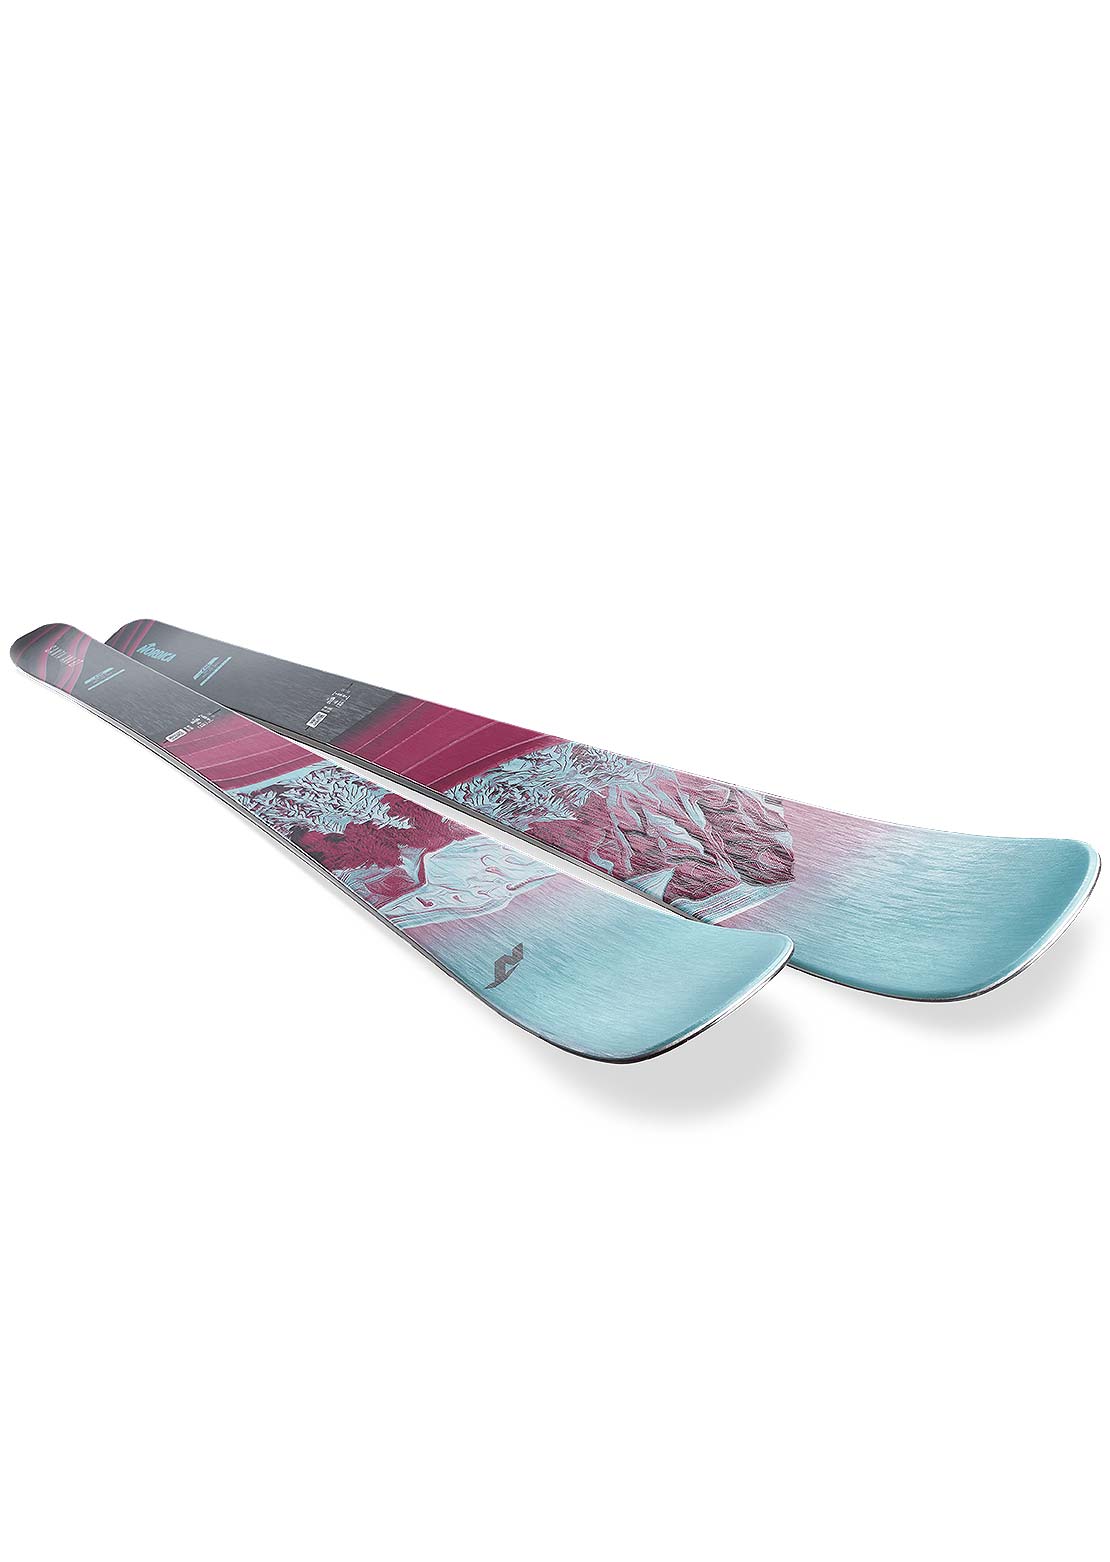 Nordica Women&#39;s Santa Ana 87 Skis Blue/Purple